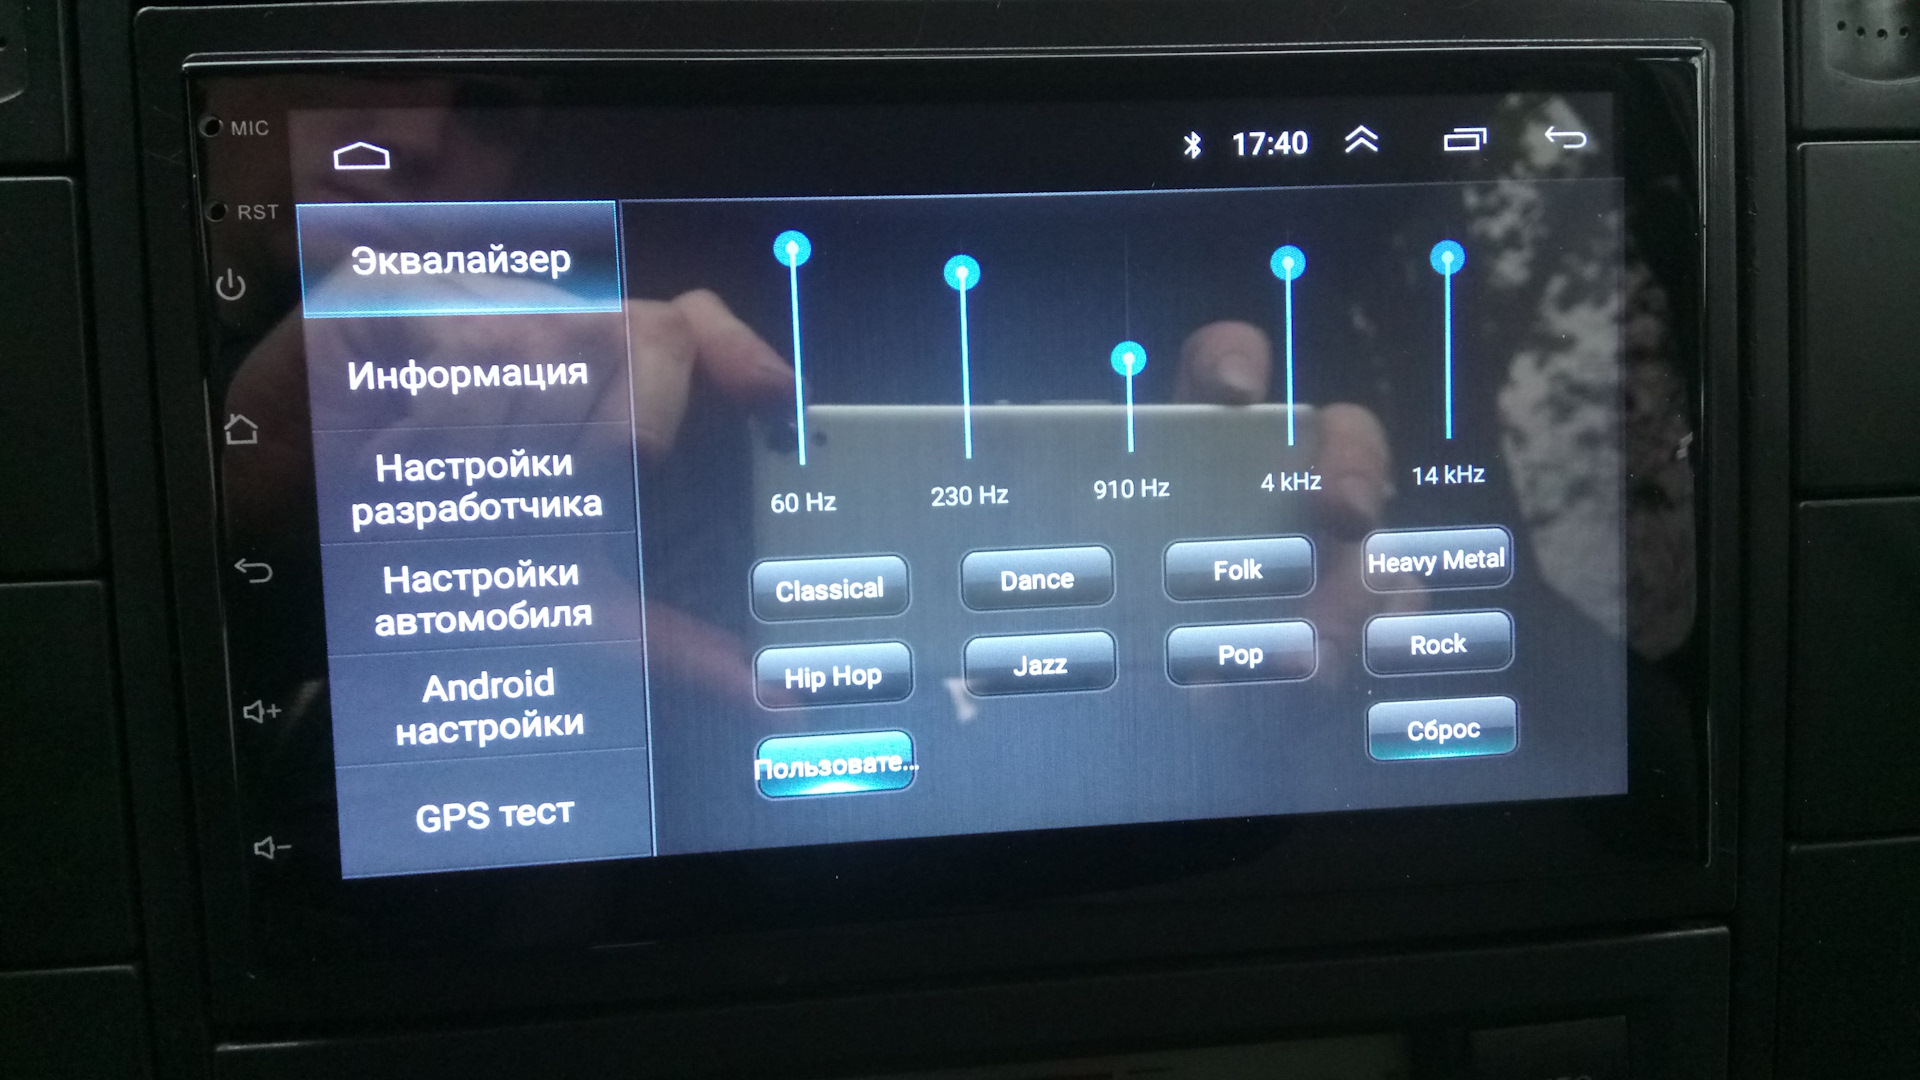 Звук автомагнитолы на андроиде. 8227l магнитола эквалайзер. Китайская магнитола 2 din эквалайзер. Android магнитола 10 дюймов эквалайзер.